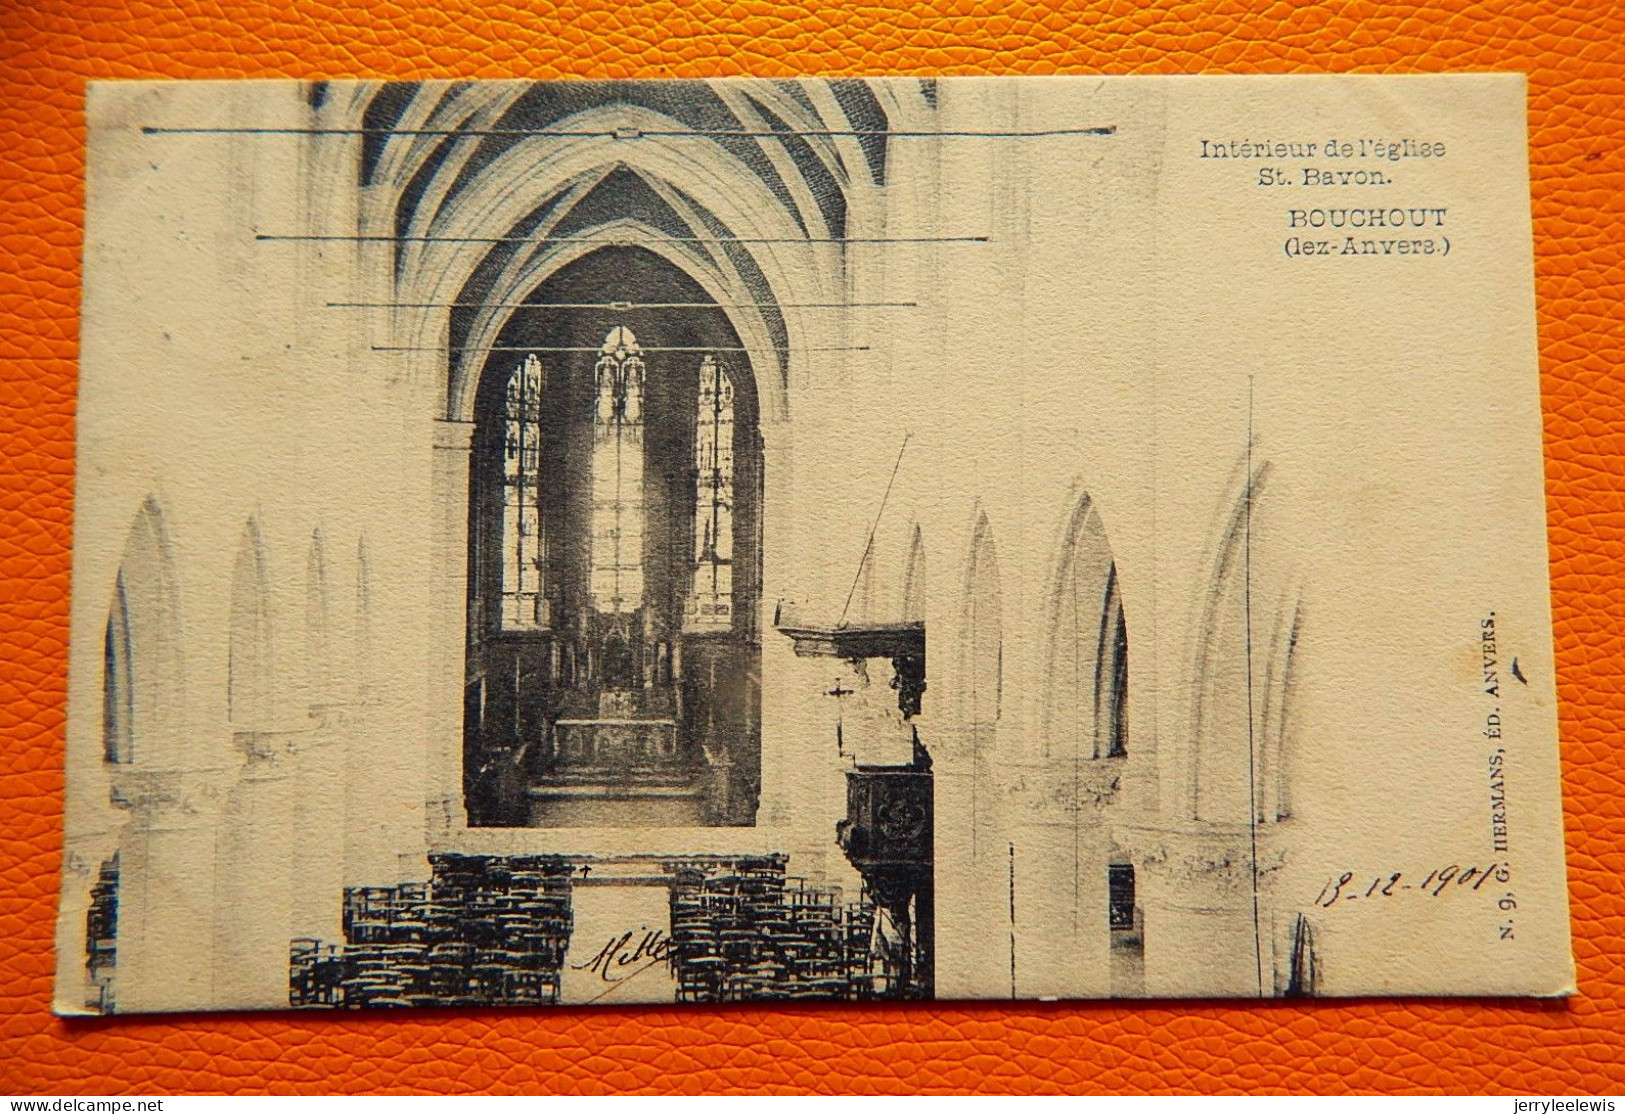 BOECHOUT - BOUCHOUT -   Binnenzicht Der Kerk  St Bavon - Intérieur De L'église St Bavon  -  1901 - Böchout